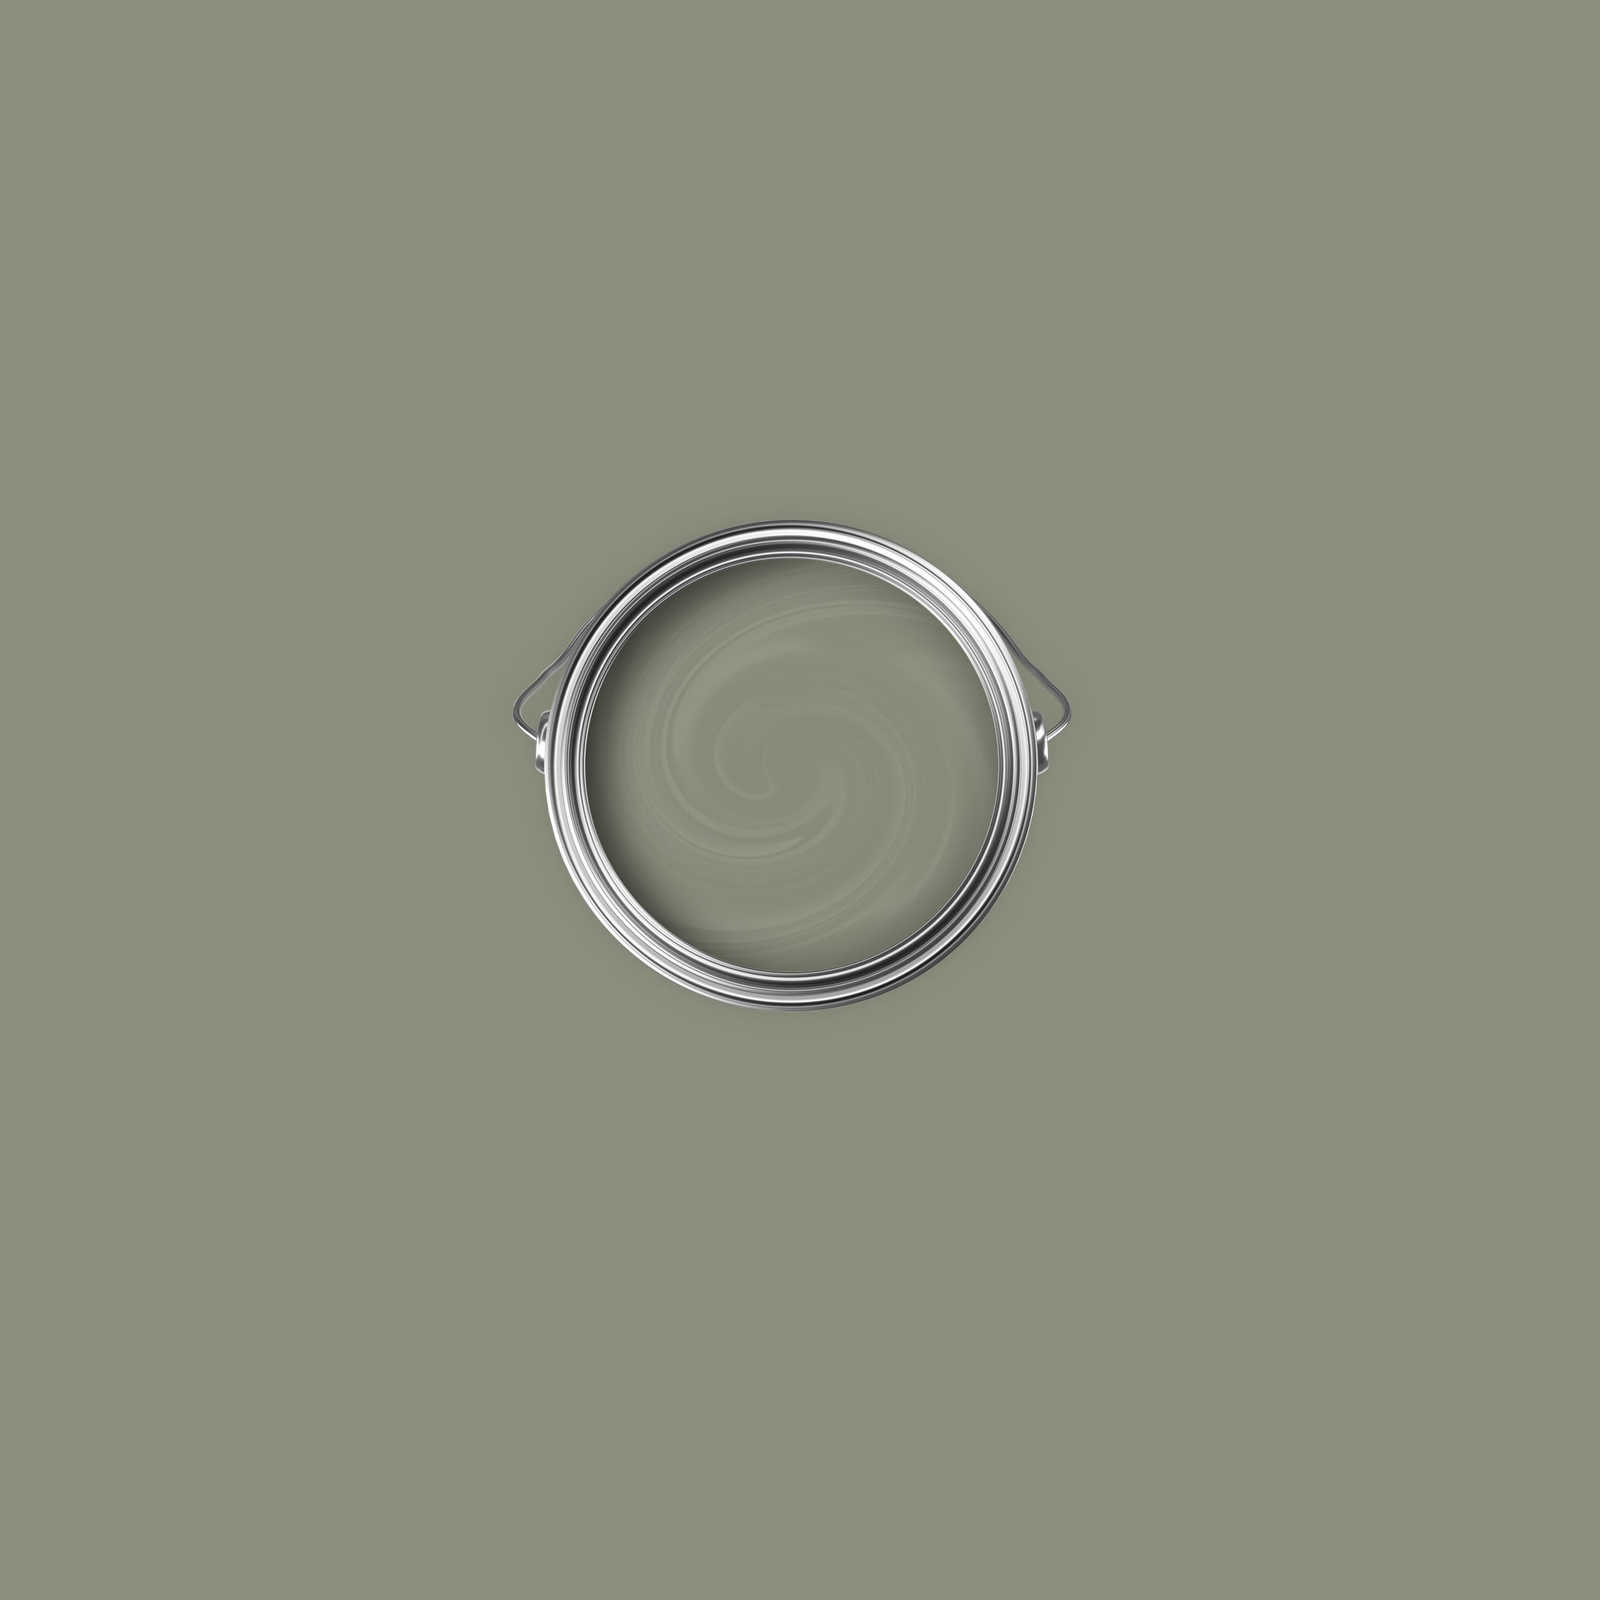             Premium Wandfarbe überzeugendes Olivgrün »Talented calm taupe« NW706 – 1 Liter
        